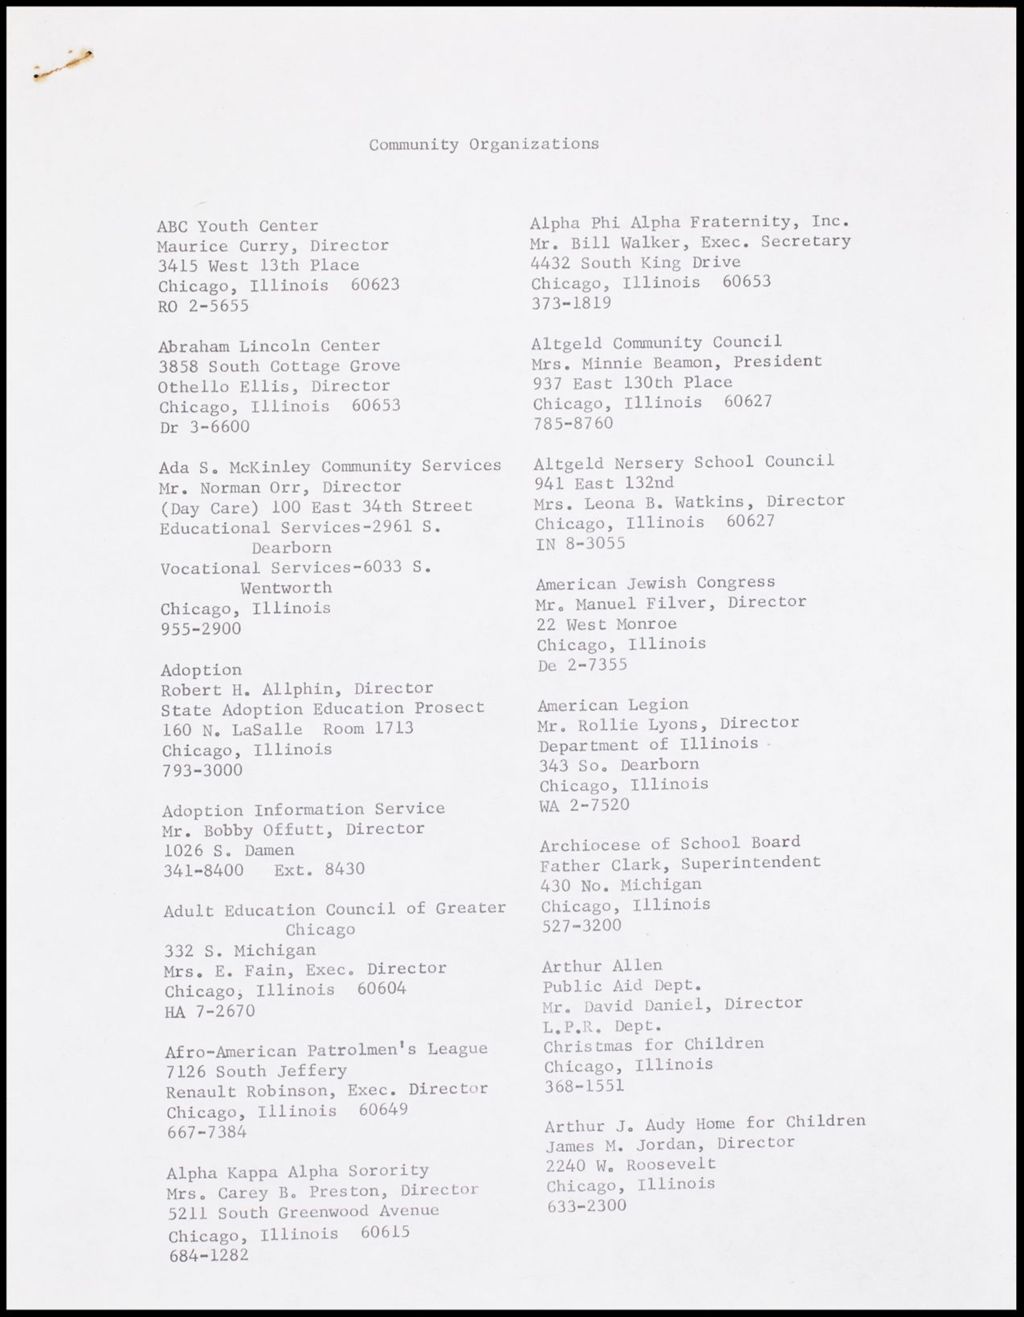 Miniature of List of Community Organizations, undated (Folder II-2267)